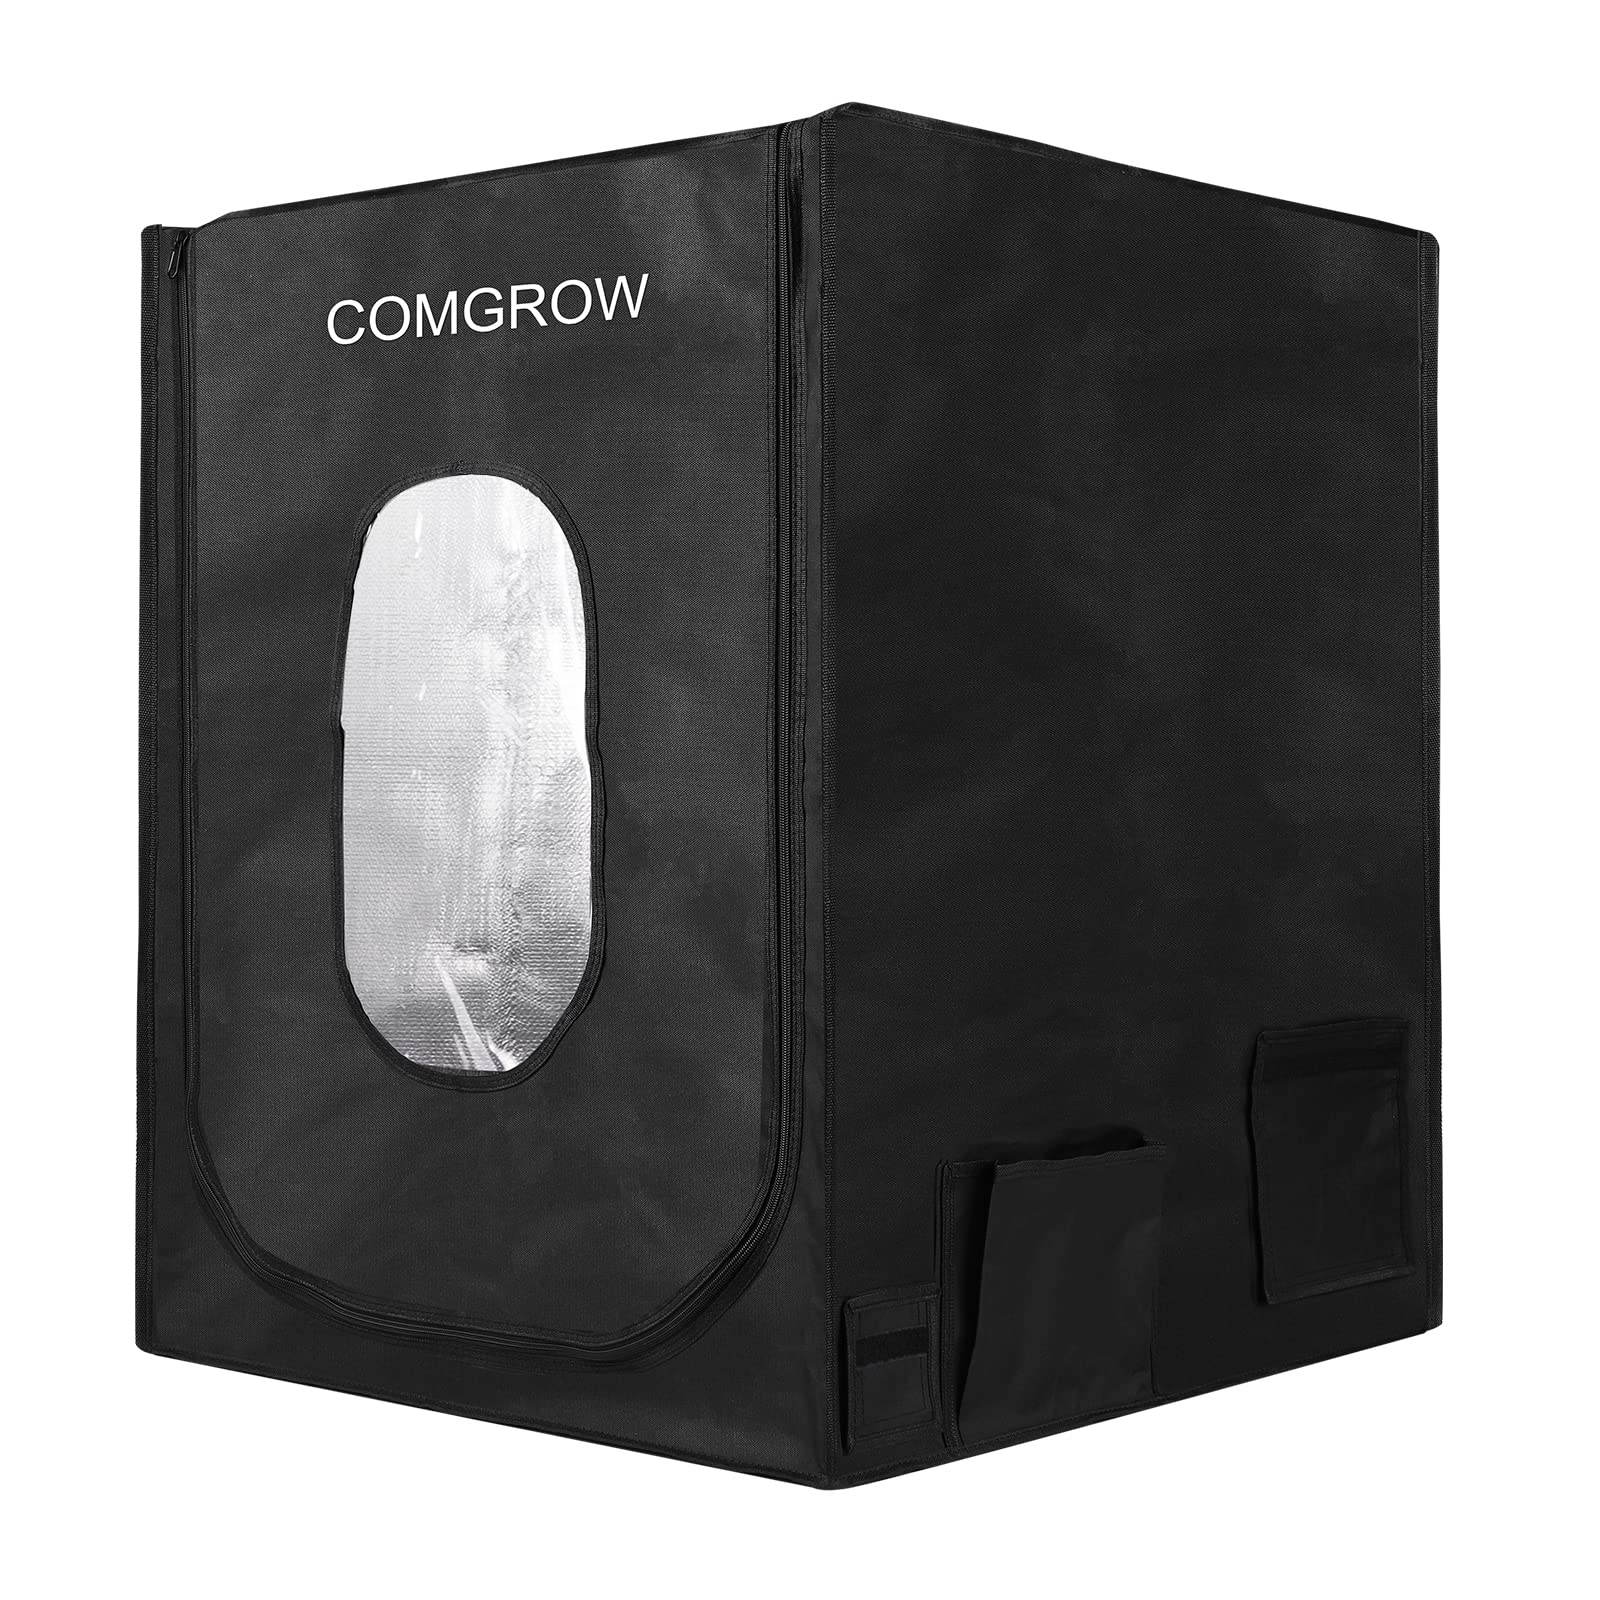 Comgrow Official Desktop Enclosure for Laser/3D Printer/CNC